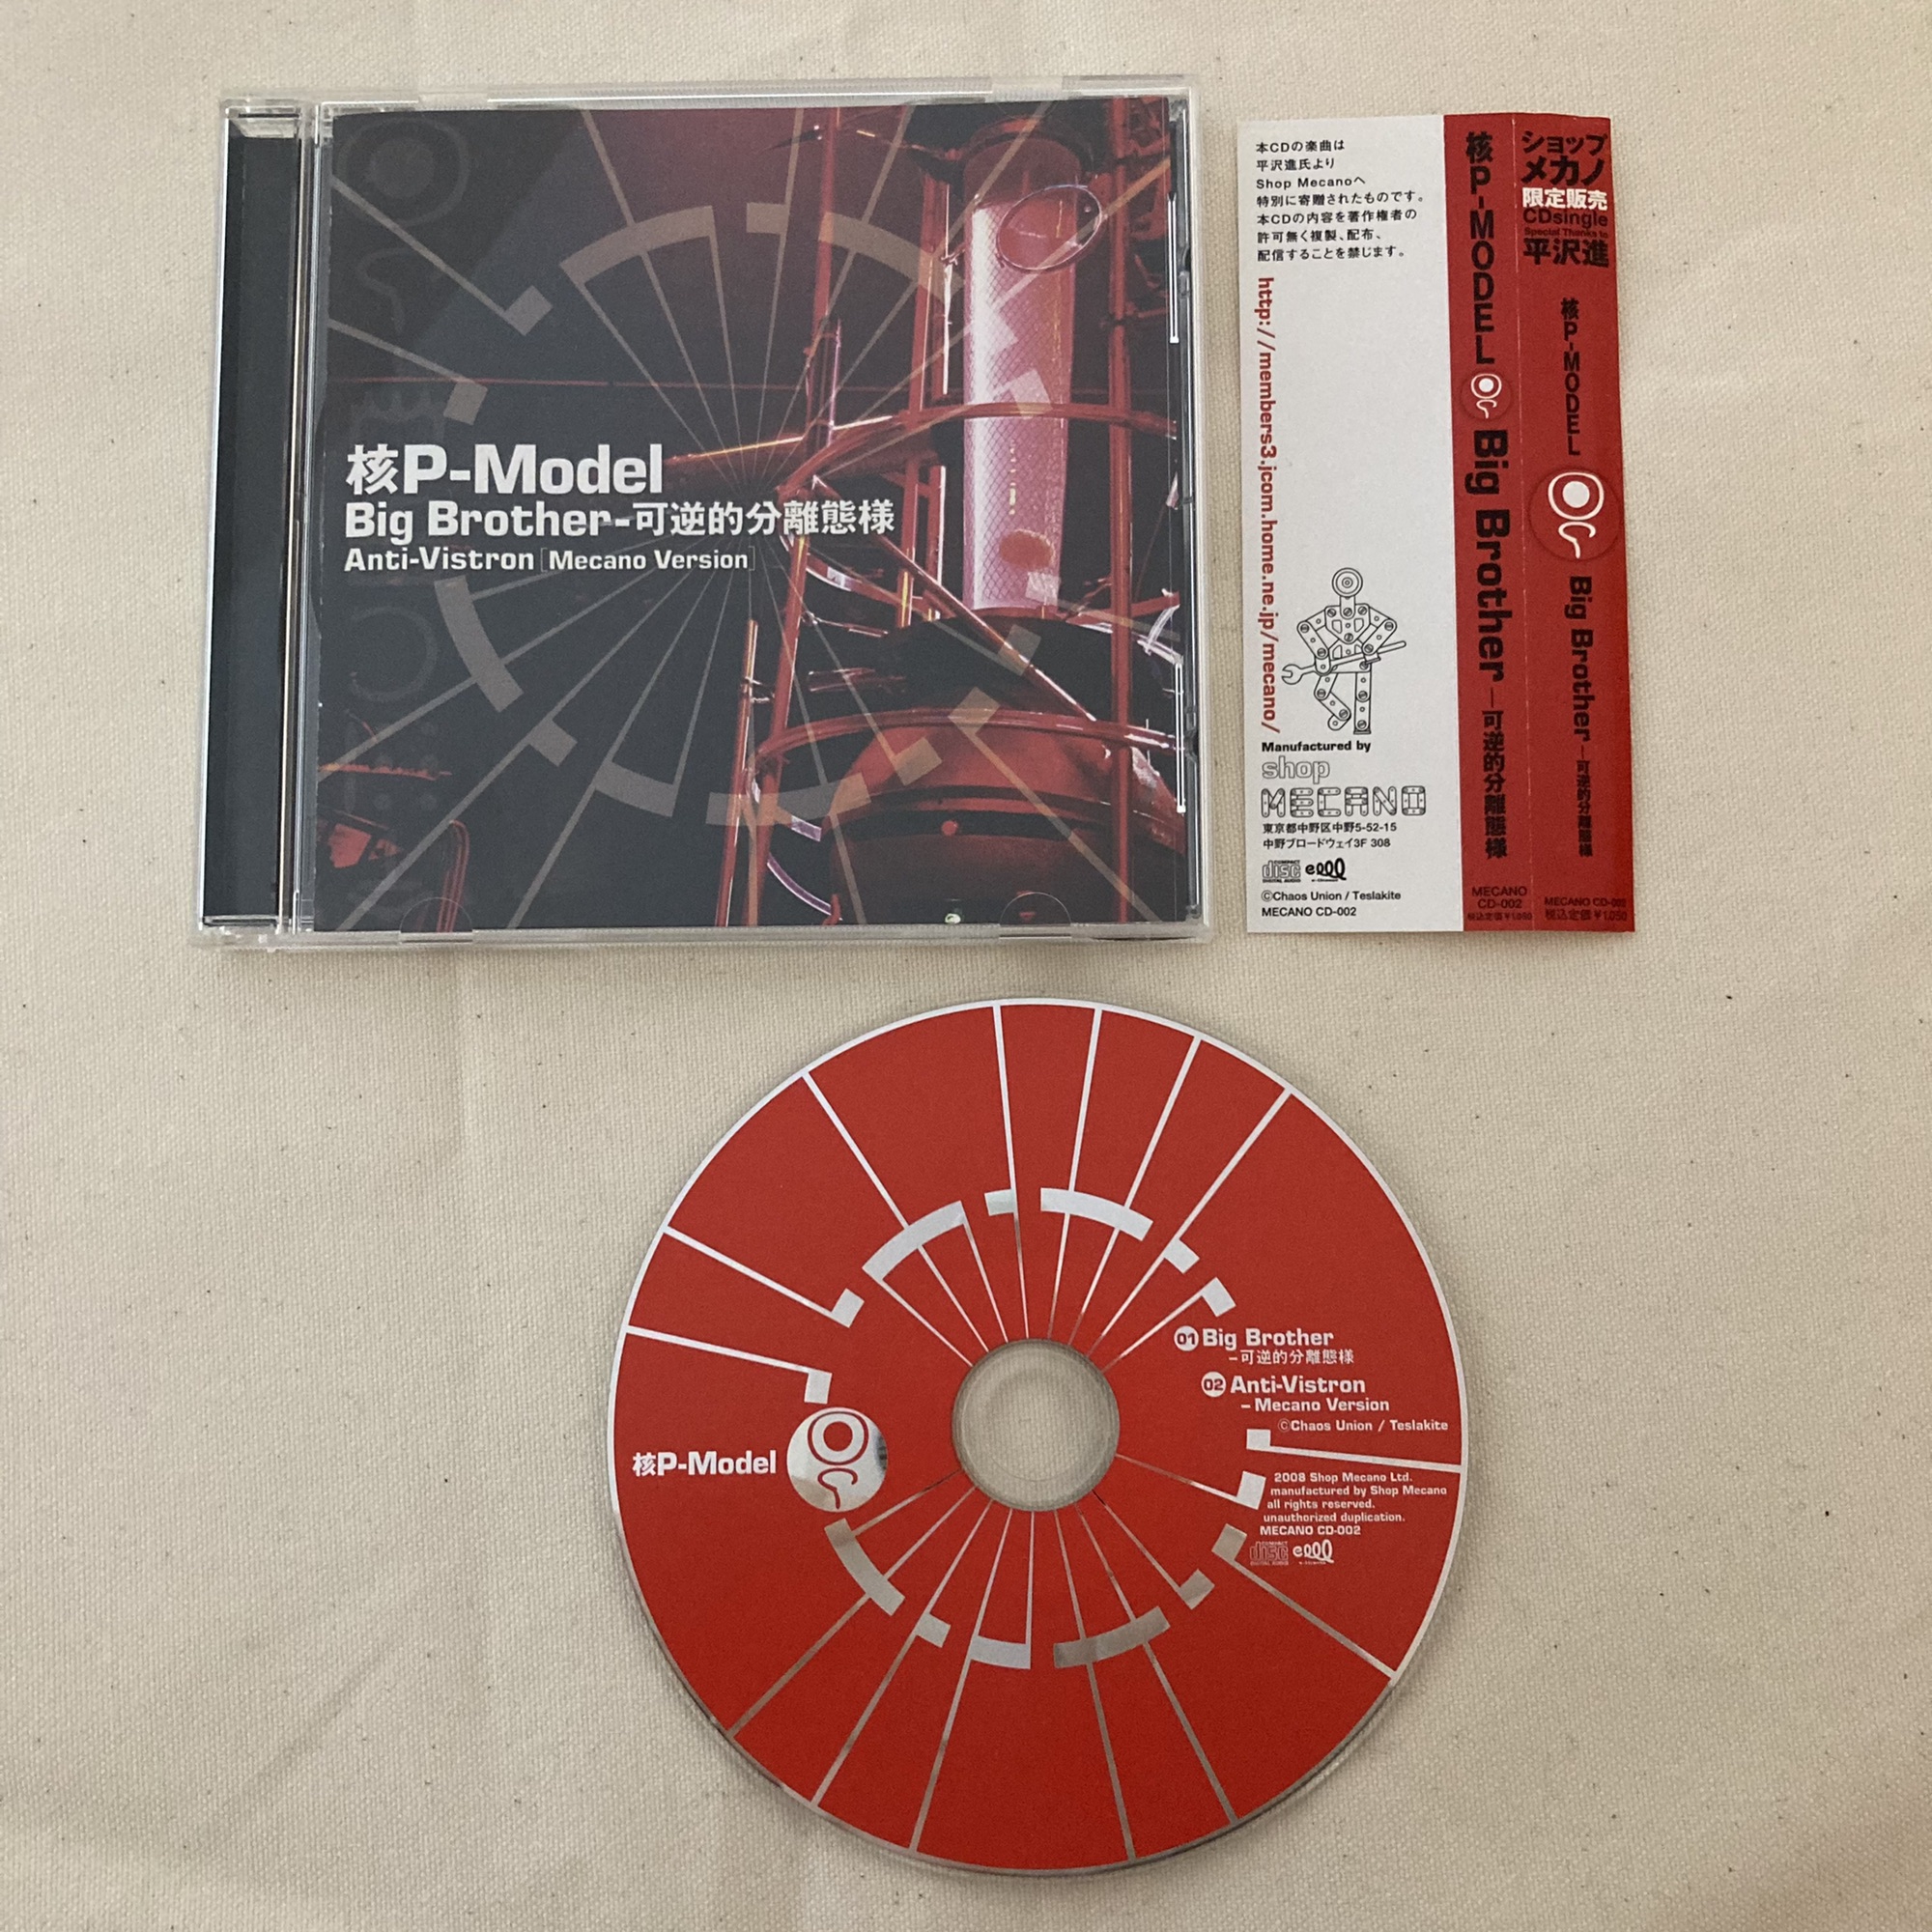 核P-MODEL CD「Big Brother 可逆的分離態様 Anti-Vistron Mecano 